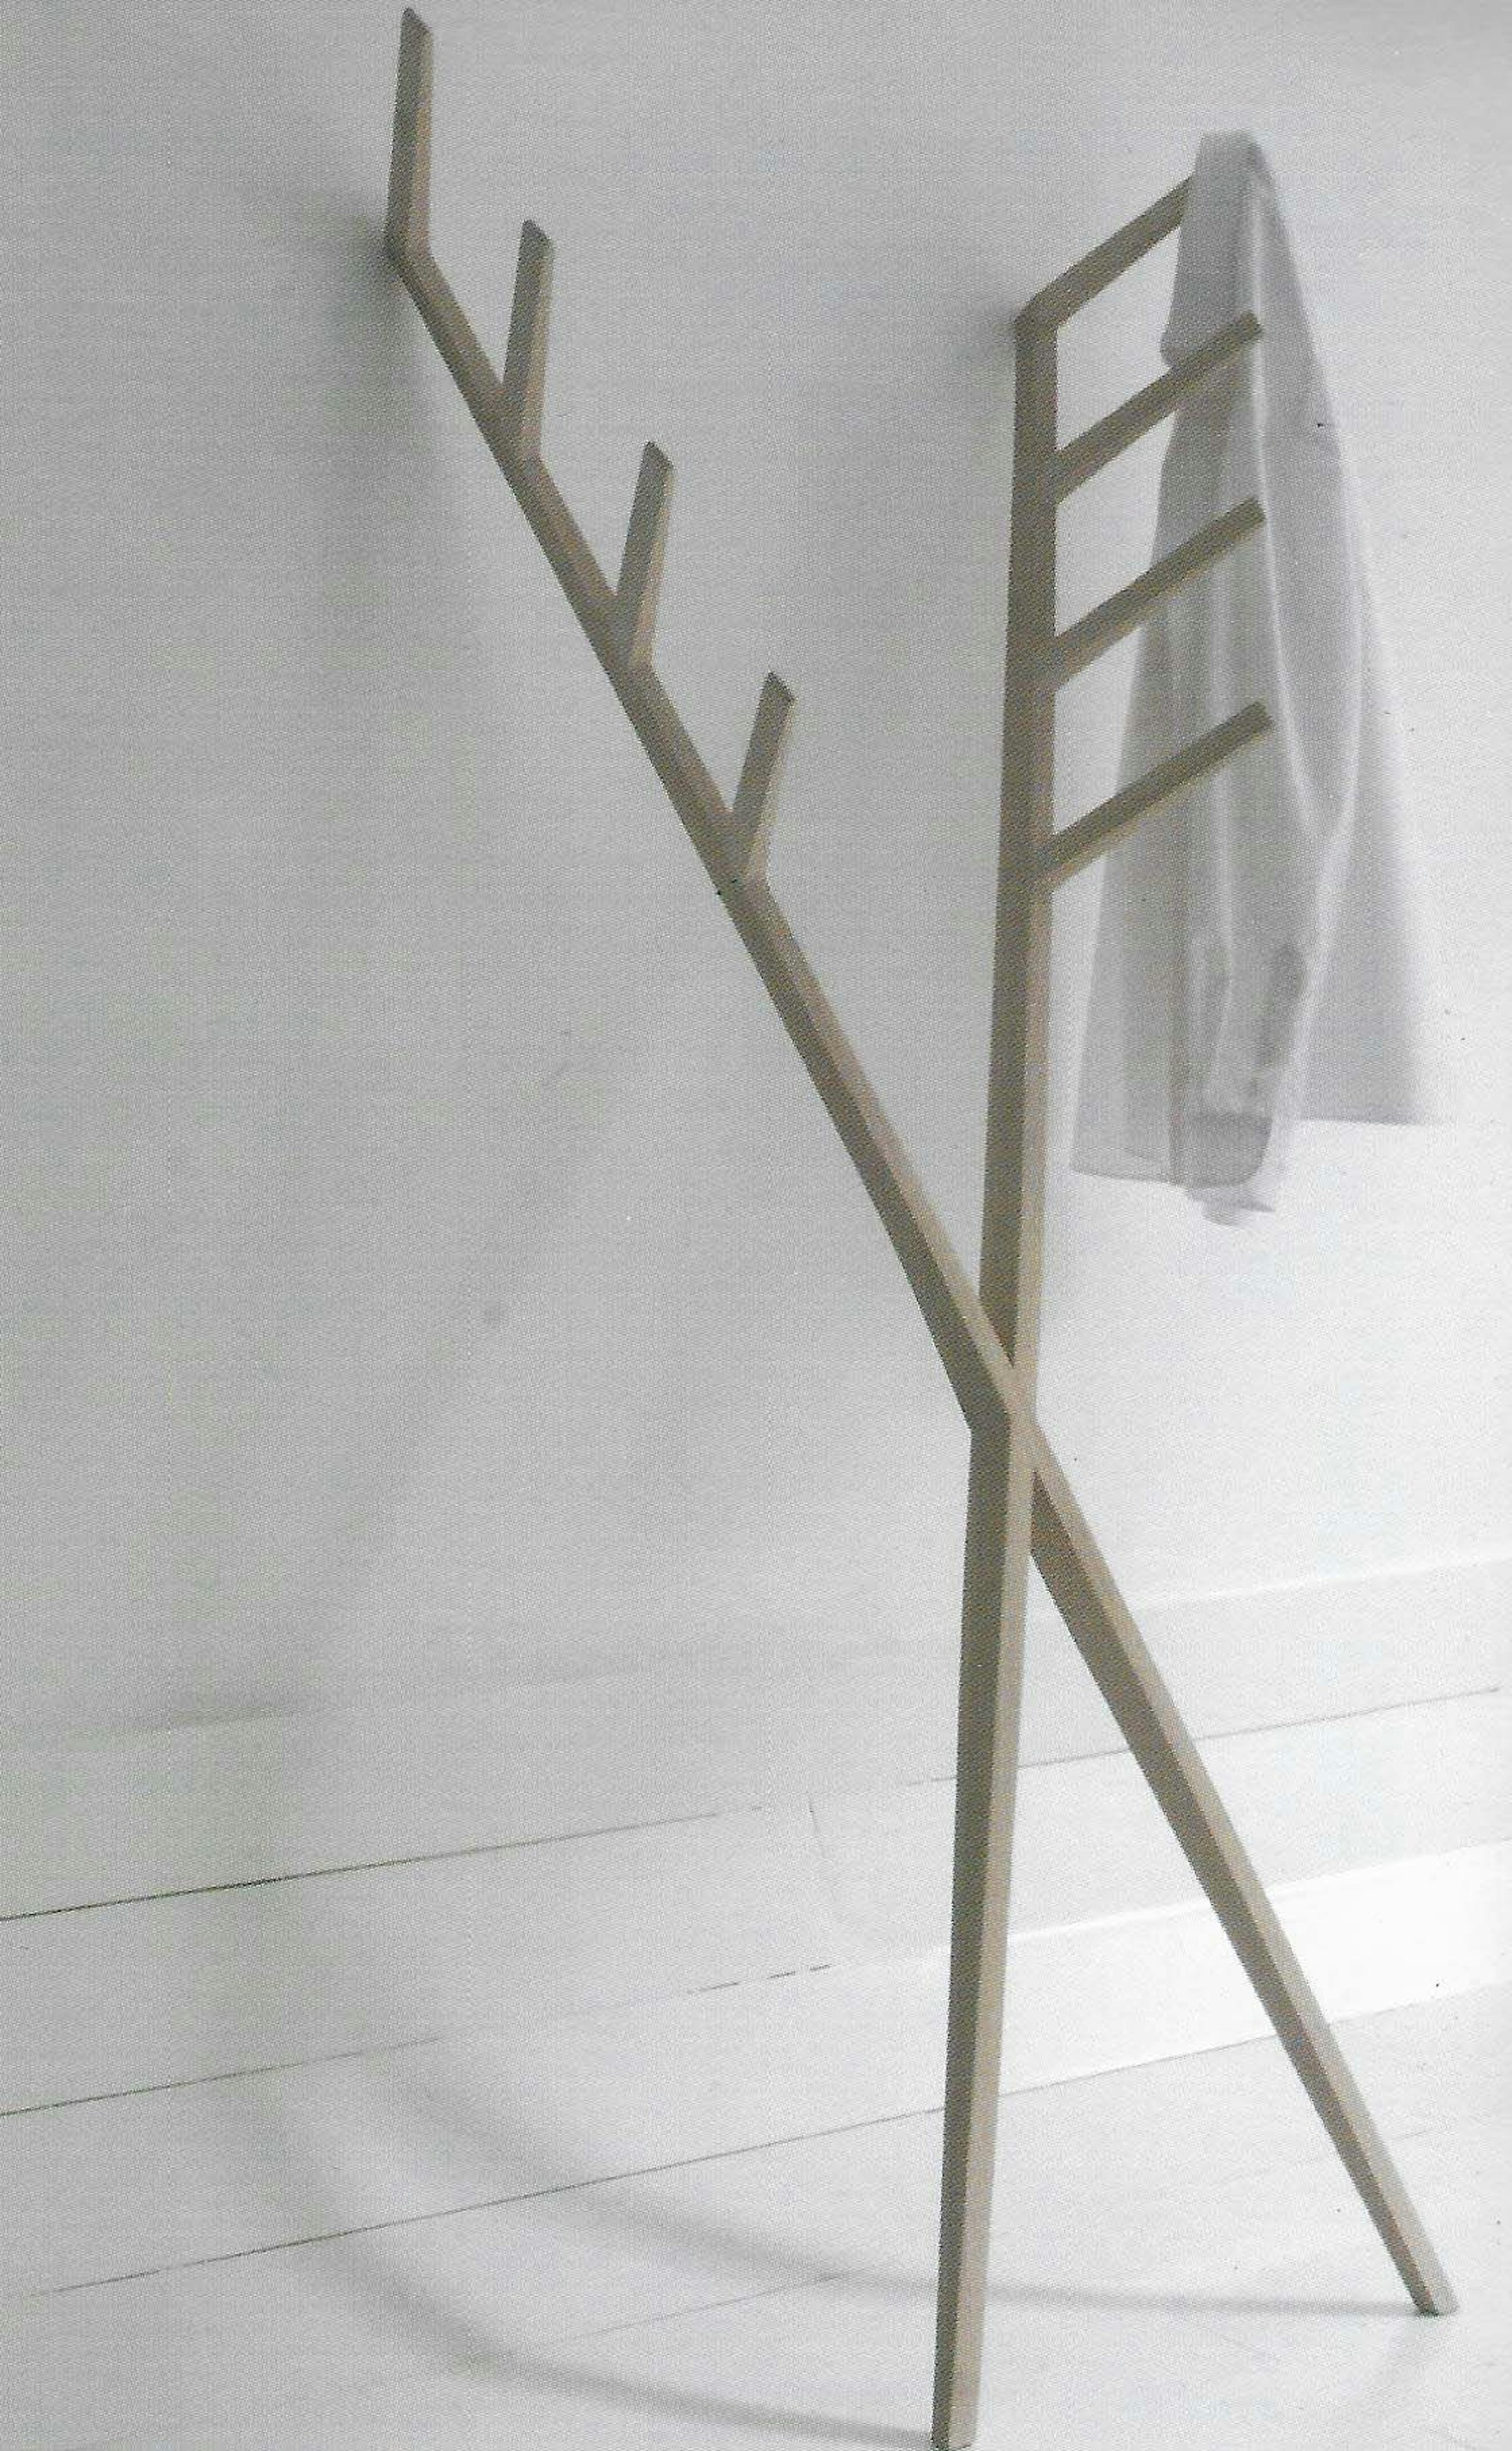 'Kstok', coat stand and hat rack for bedroom or bathroom, aM - Miel Cardinael & Sven Goemaere